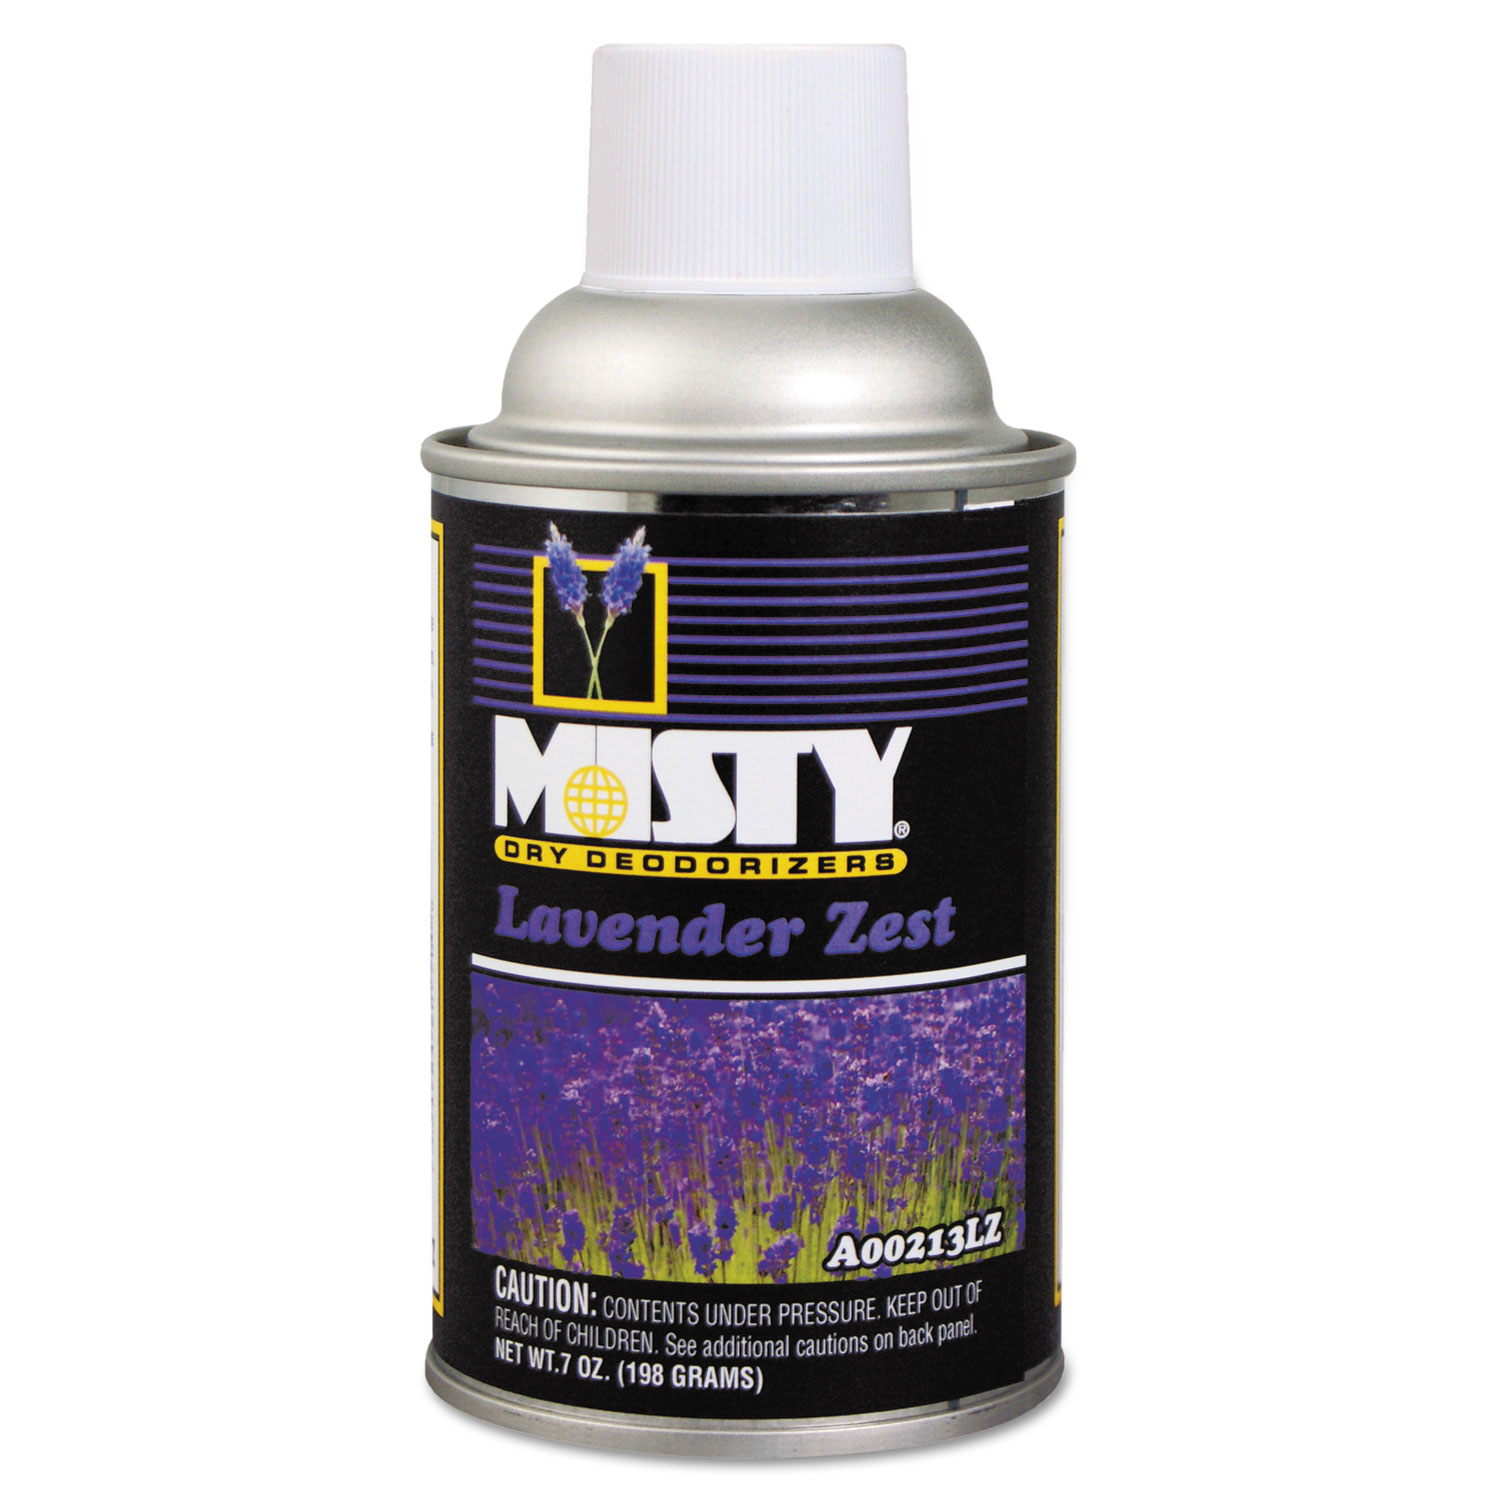  Misty 1039375 Metered Dry Deodorizer Refills, Lavender Zest, 7 oz Aerosol, 12/Carton (AMR1039375) 